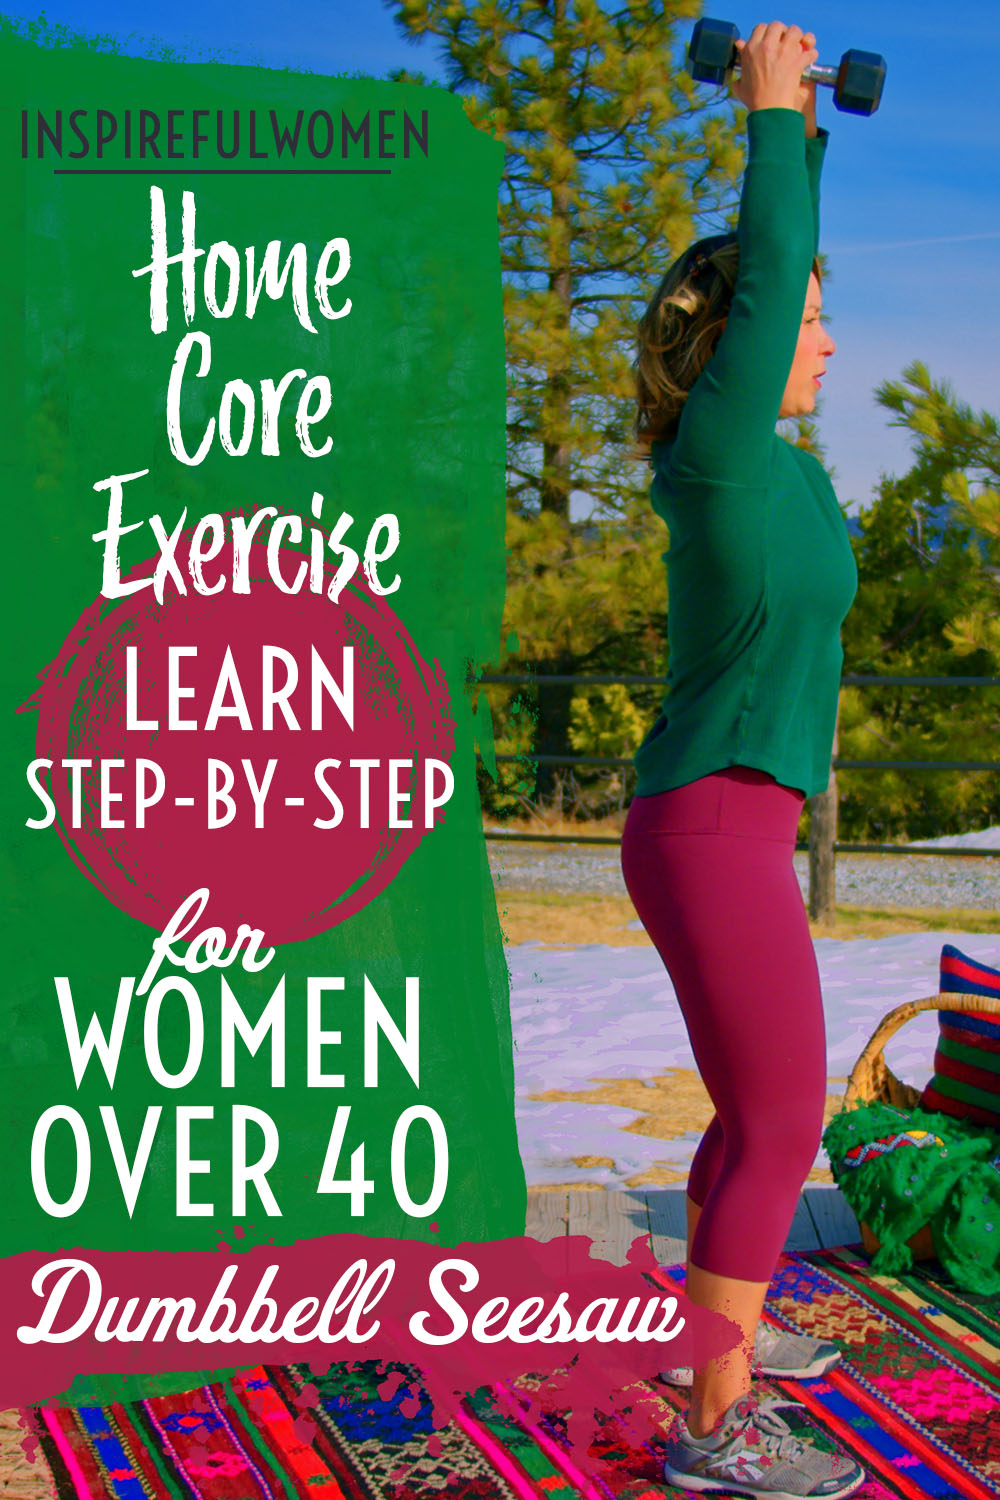 dumbbell-seesaw-neutral-spine-core-exercise-rectus-abdominus-back-extensors-home-resistance-training-women-40-plus